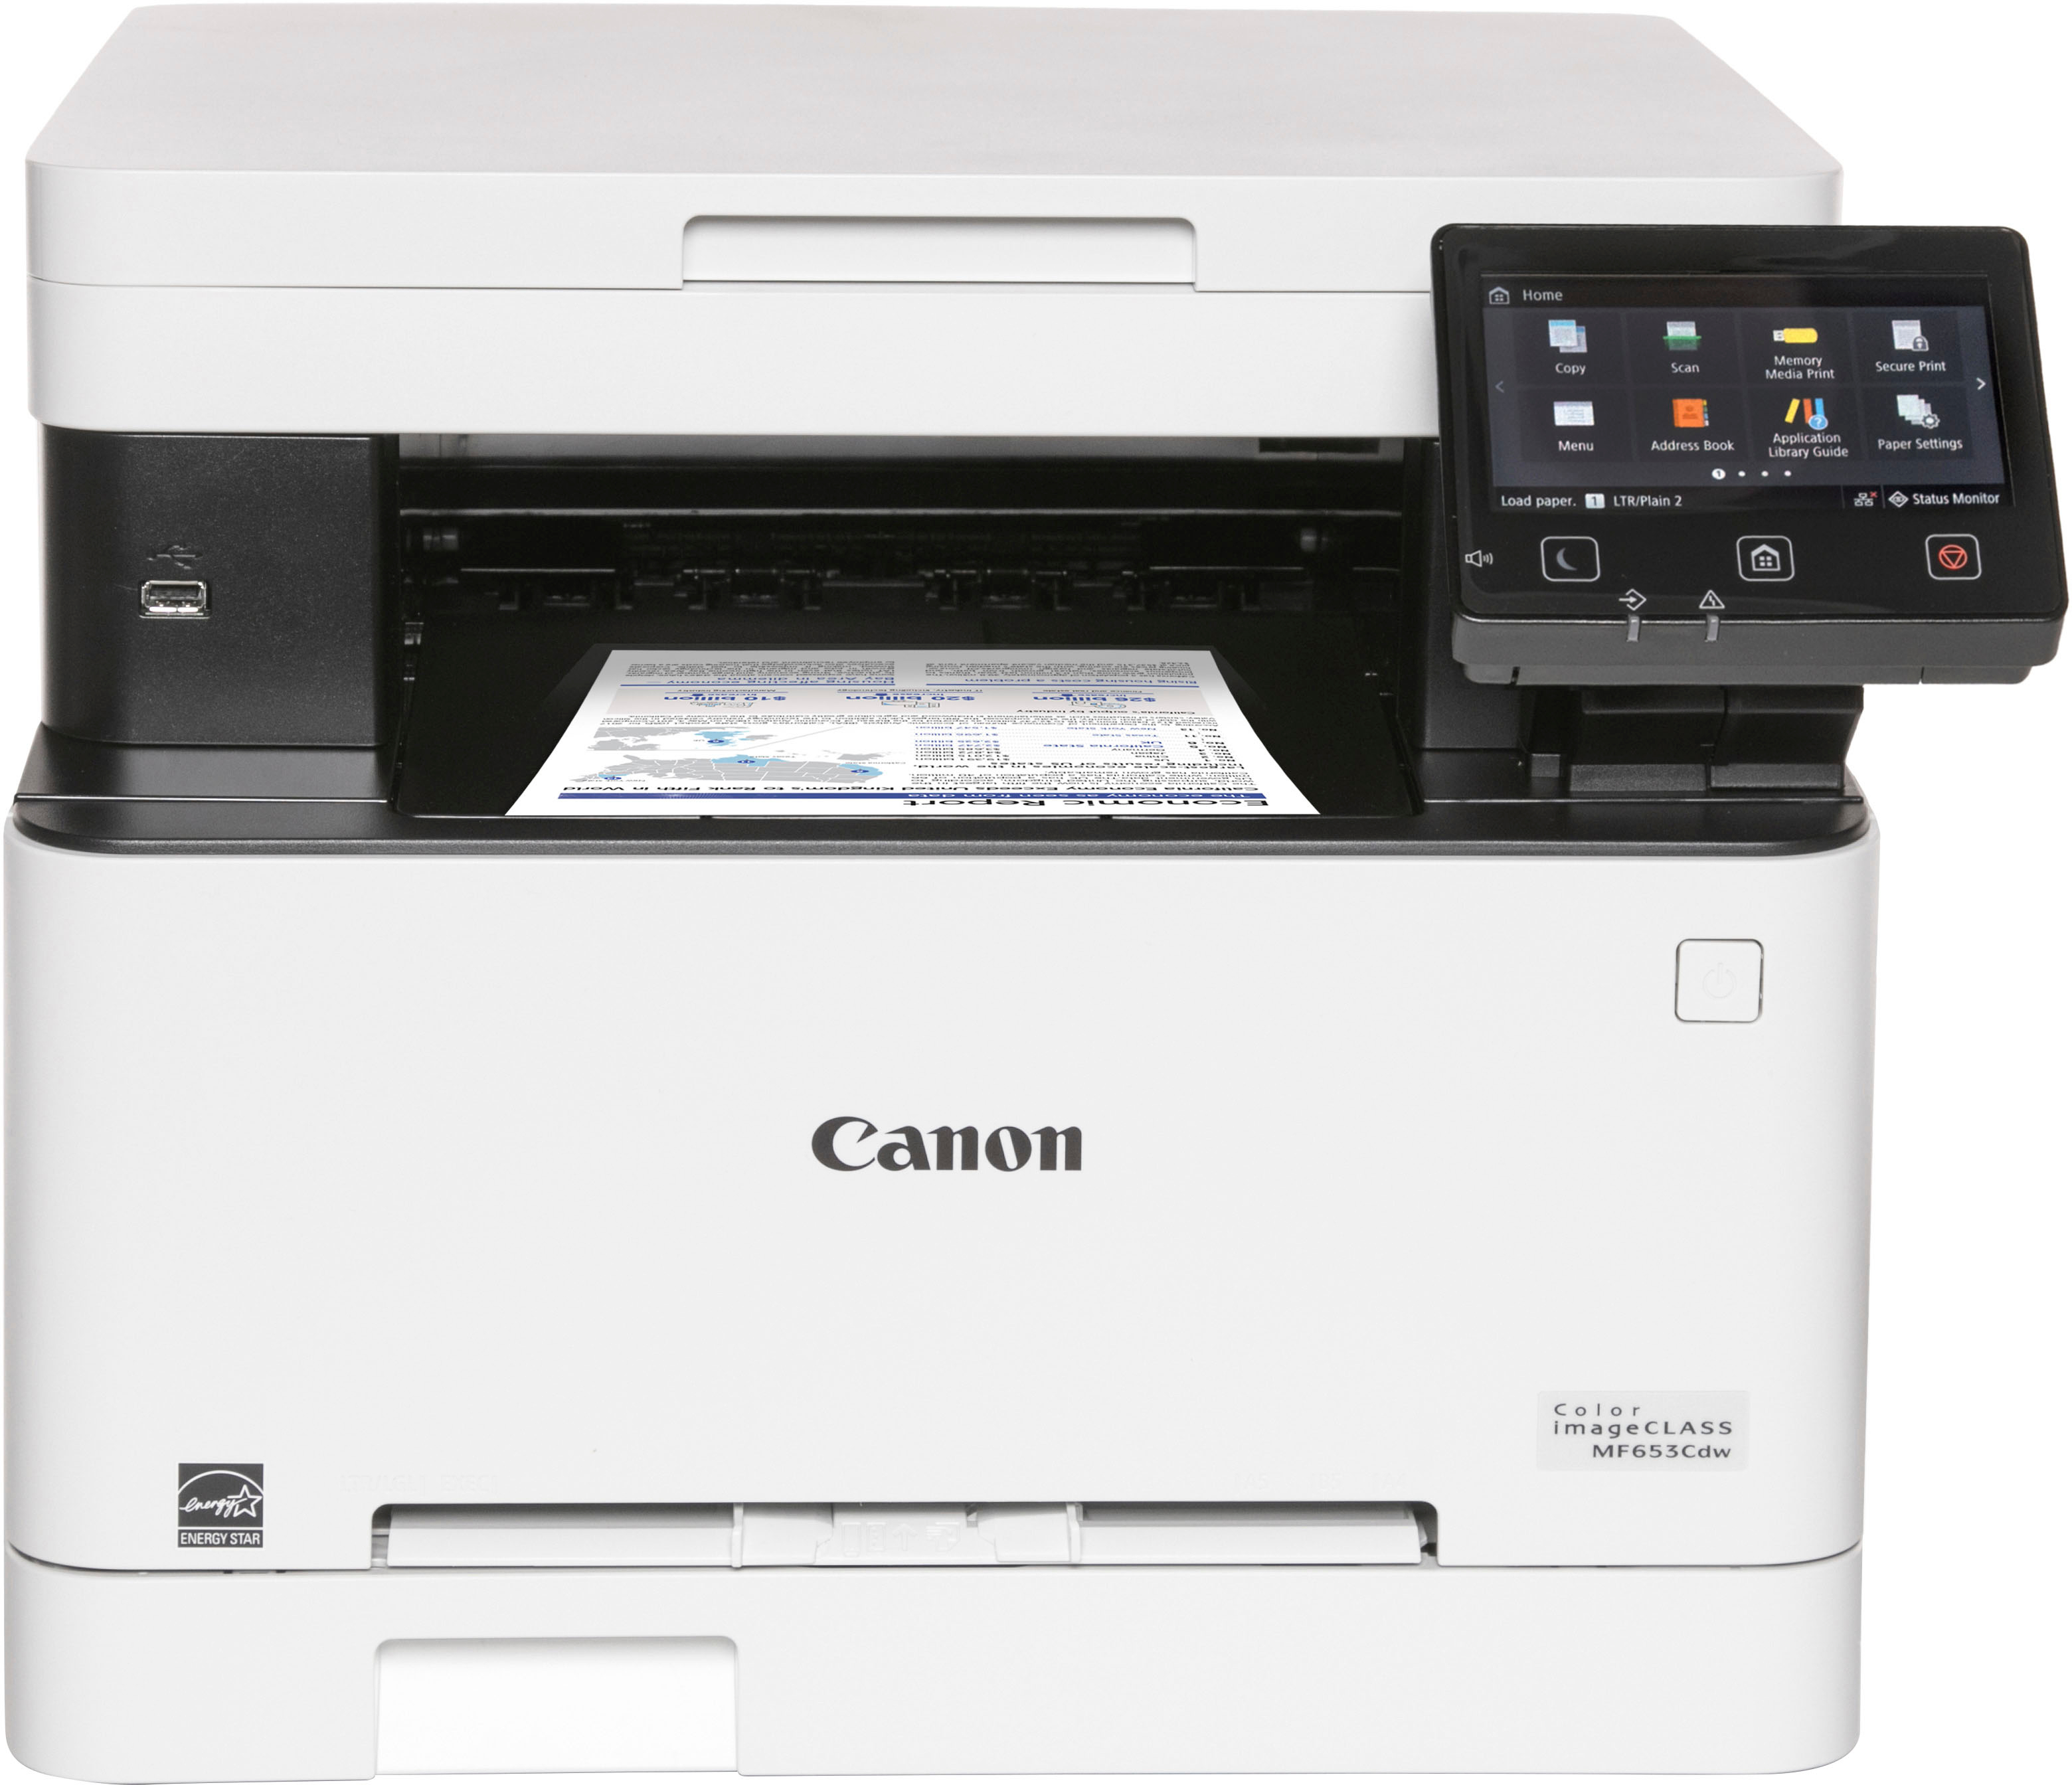 Nationaal Ontslag Honderd jaar Canon imageCLASS MF653Cdw Wireless Color All-In-One Laser Printer White  5158C007 - Best Buy